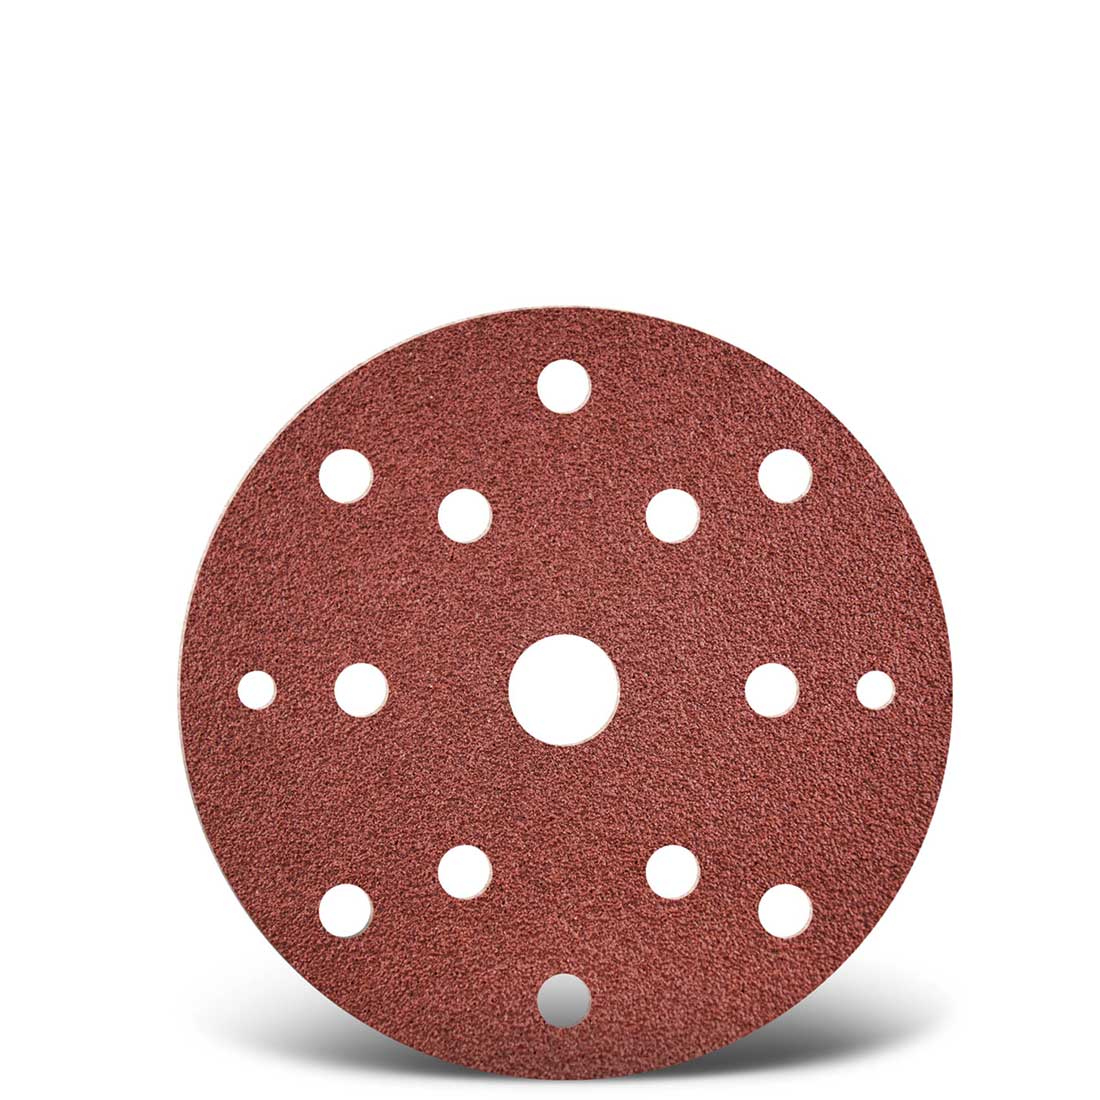 MENZER hook & loop sanding discs for random orbital sanders, G24–240, Ø 150 mm / 15 hole / aluminium oxide